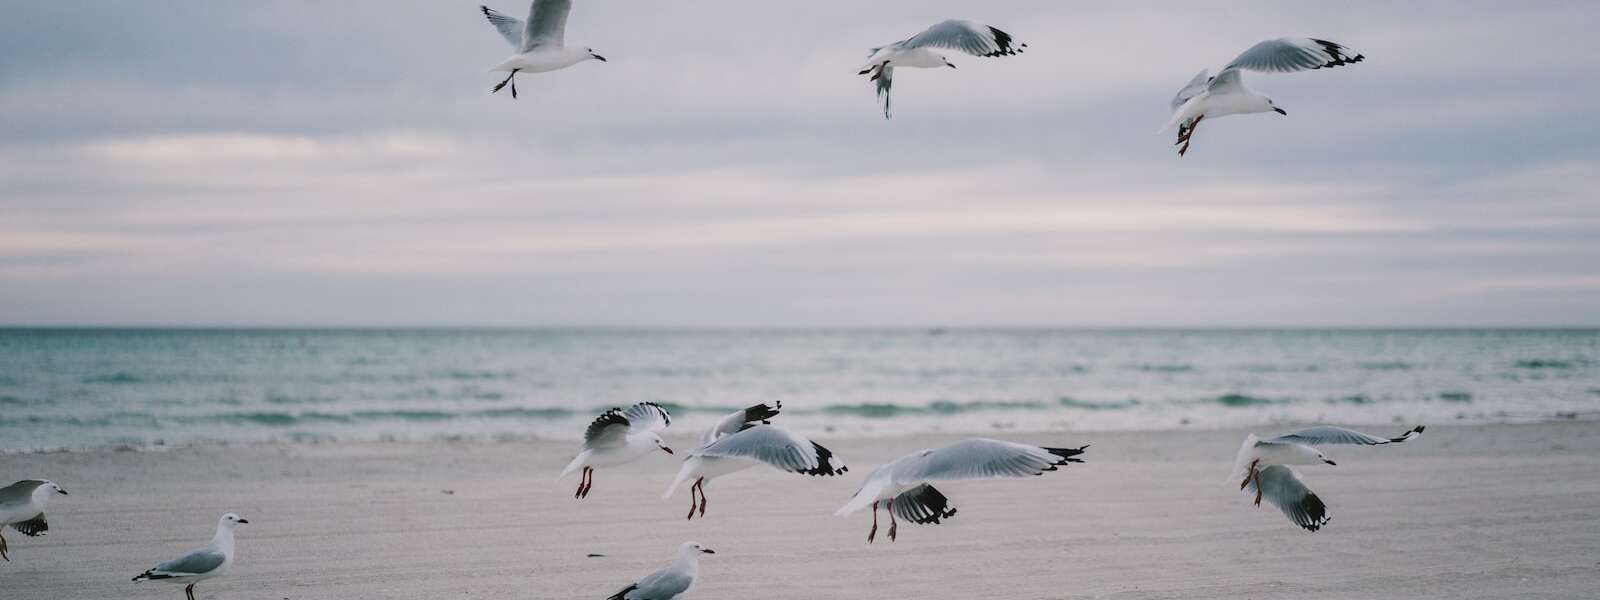 A flock of seagulls fly over a beach